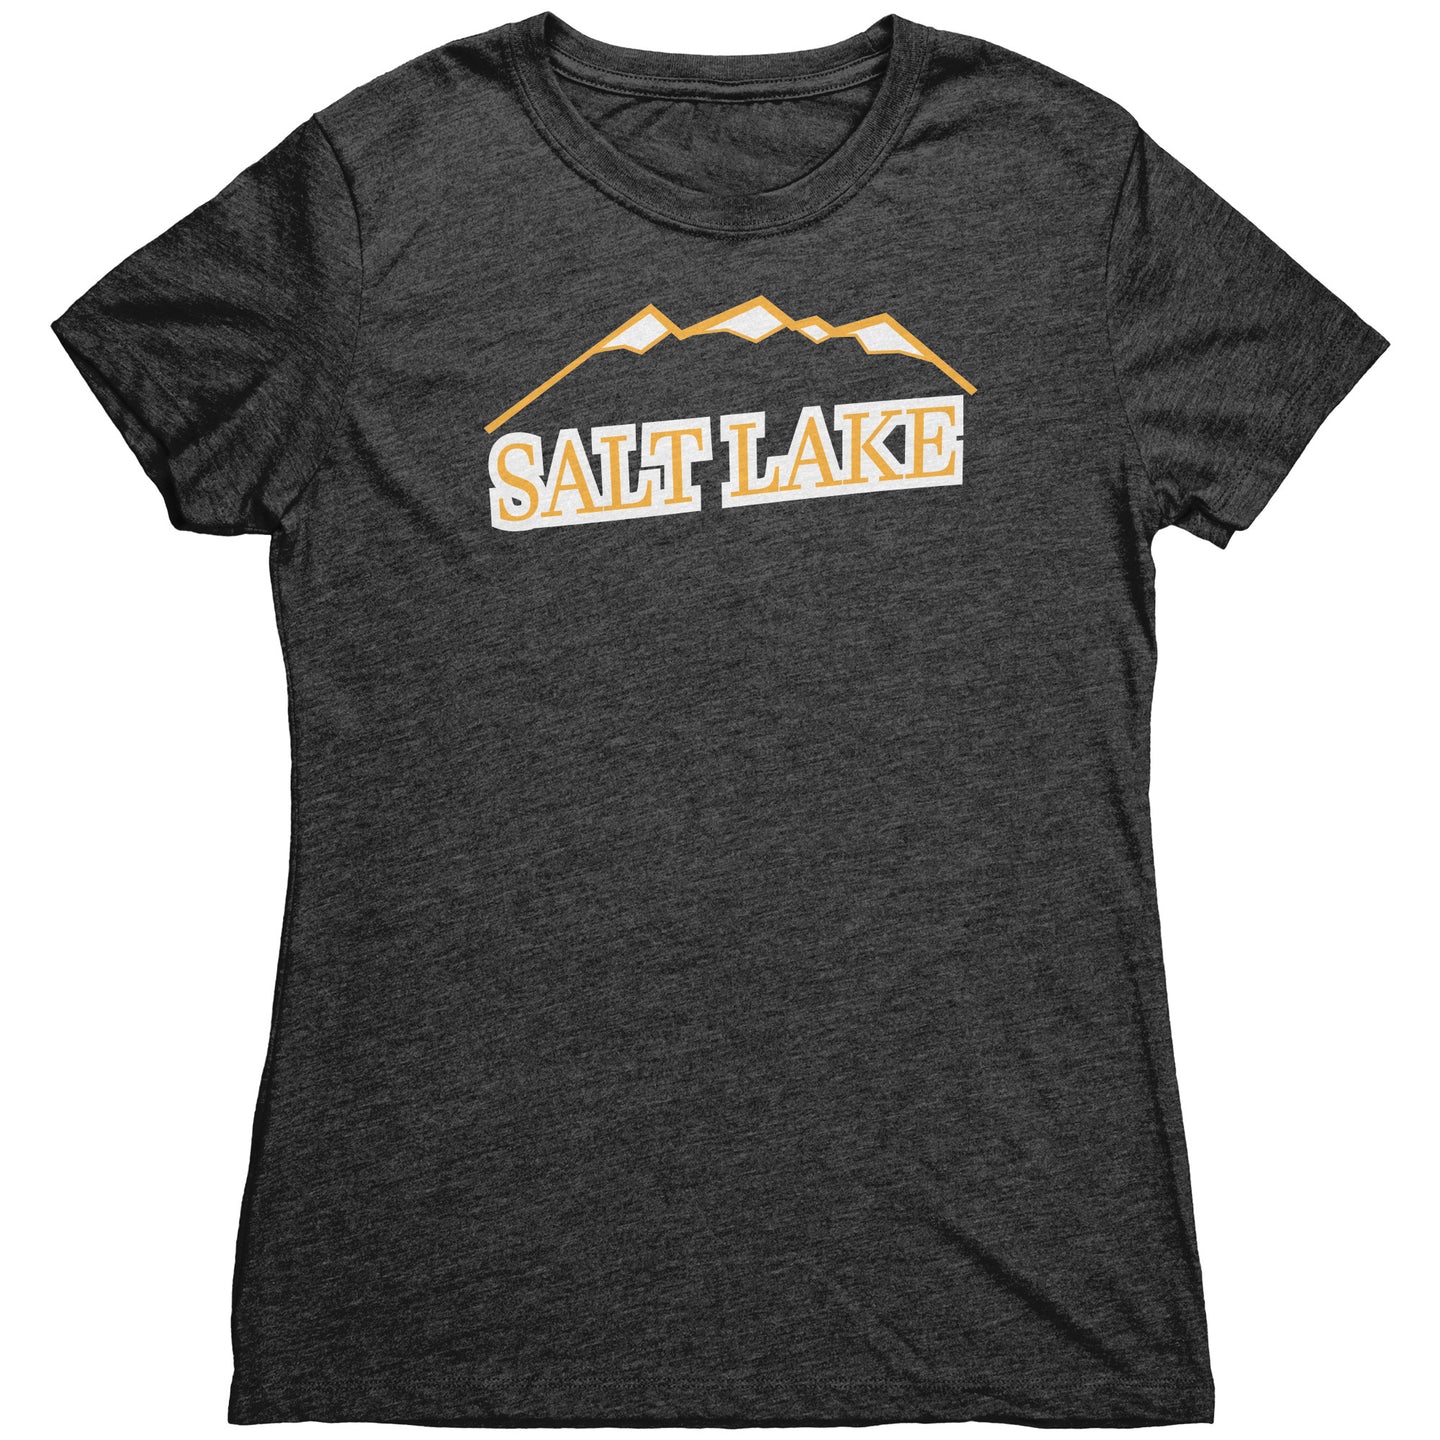 Women's Salt Lake Black Triblend T-Shirt